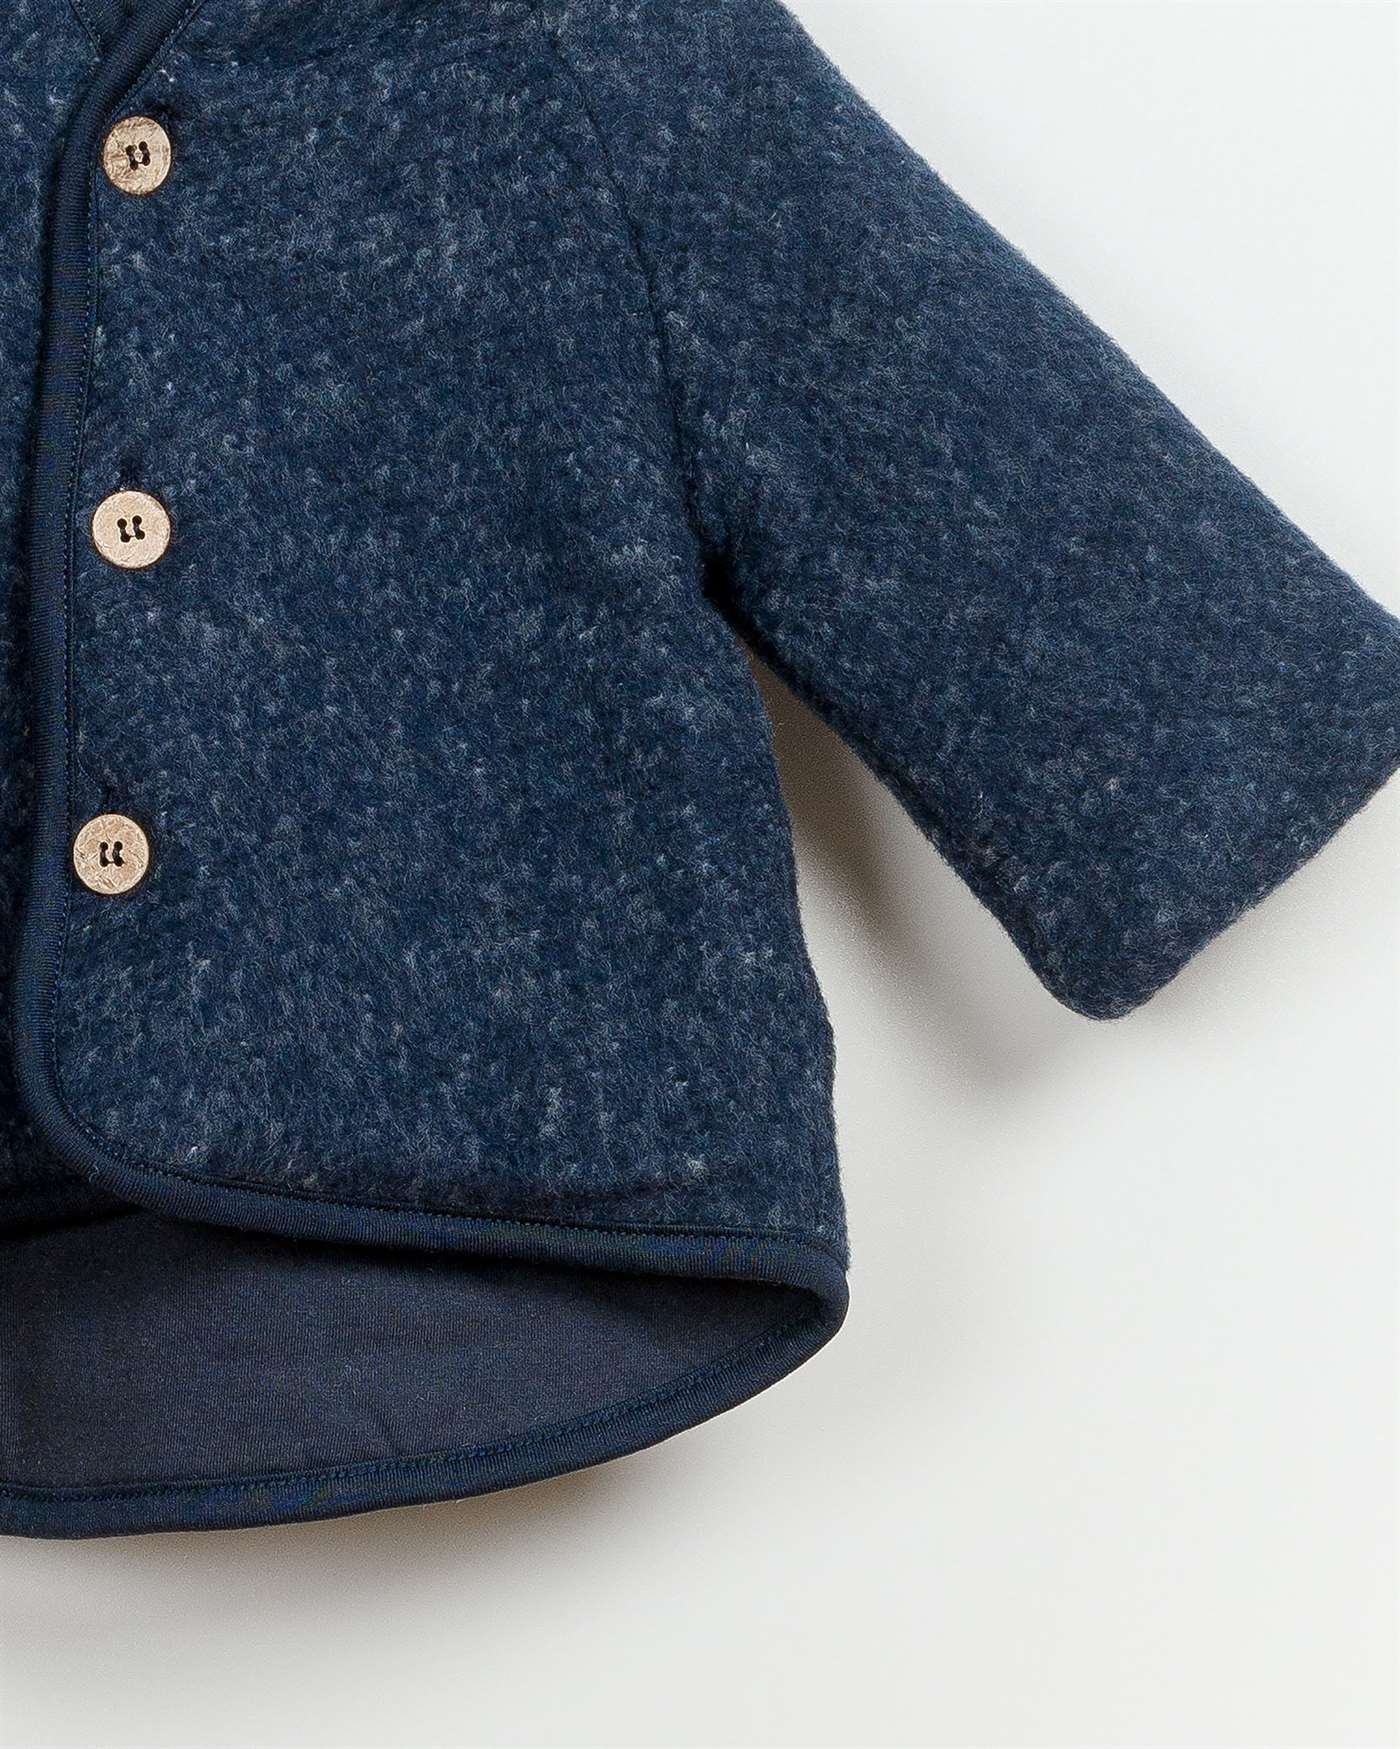 BeeBoo|BeeBoo PlayUp vêtements bébé baby clothes manteau Felpa coat coton cotton bleu blue 2